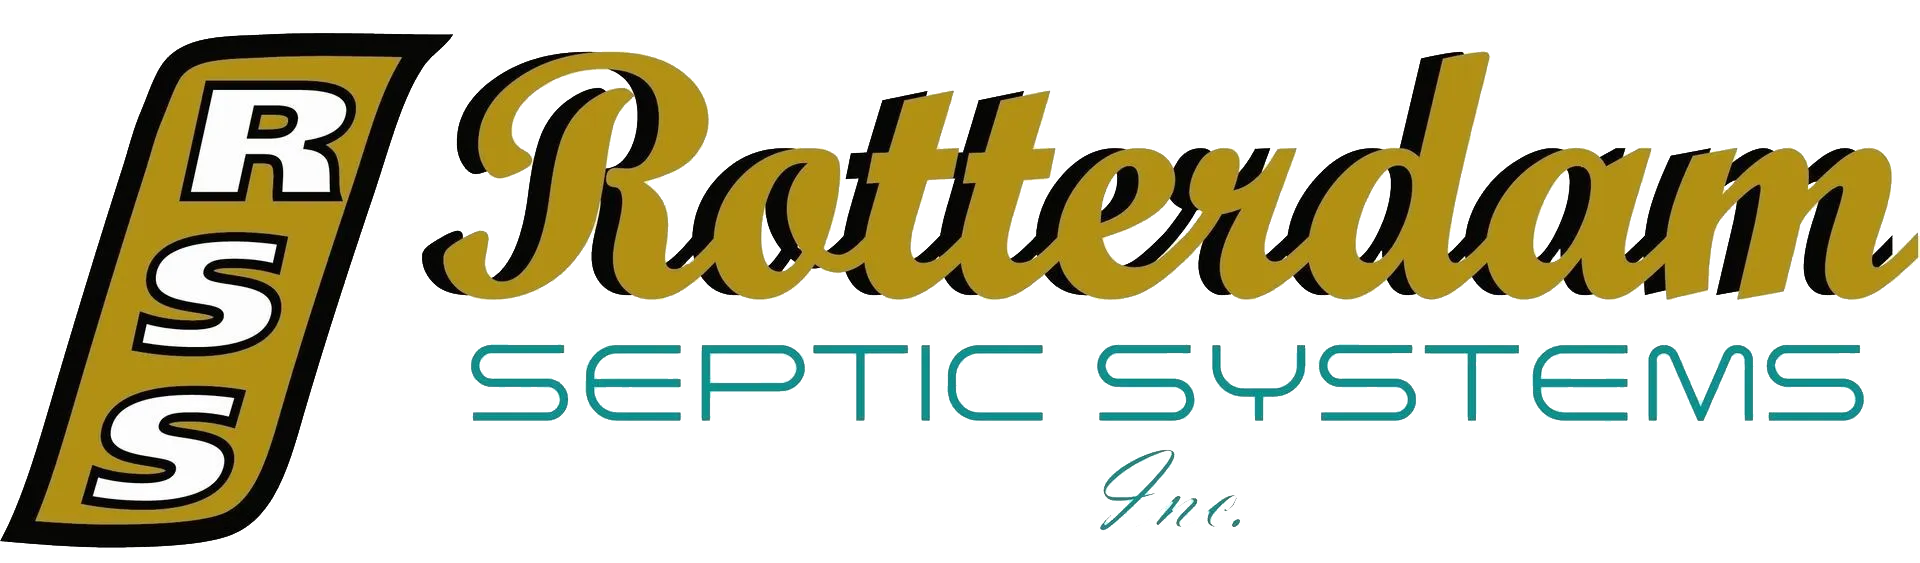 Rotterdam Septic Systems - Logo